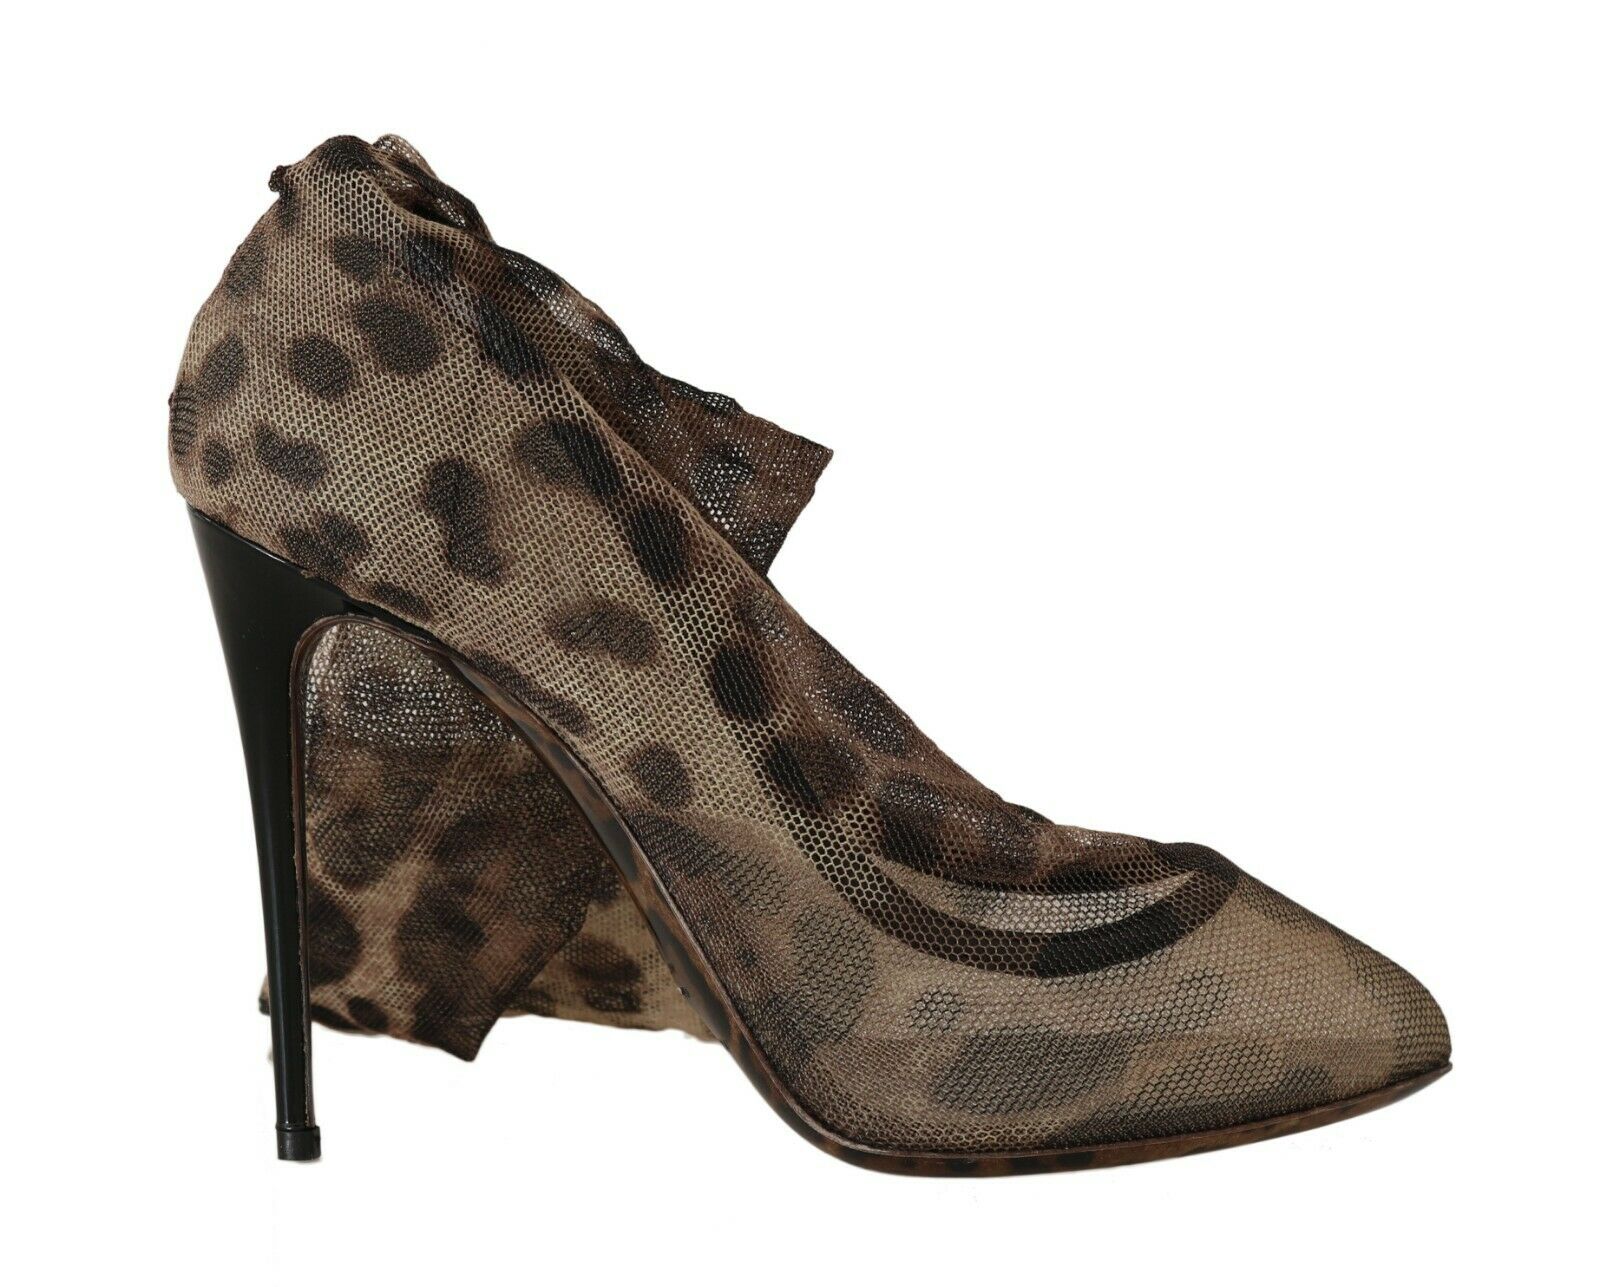 Dolce & Gabbana Women's Leopard Tulle Long Socks Pumps Shoes Brown LA6133 - EU38/US7.5